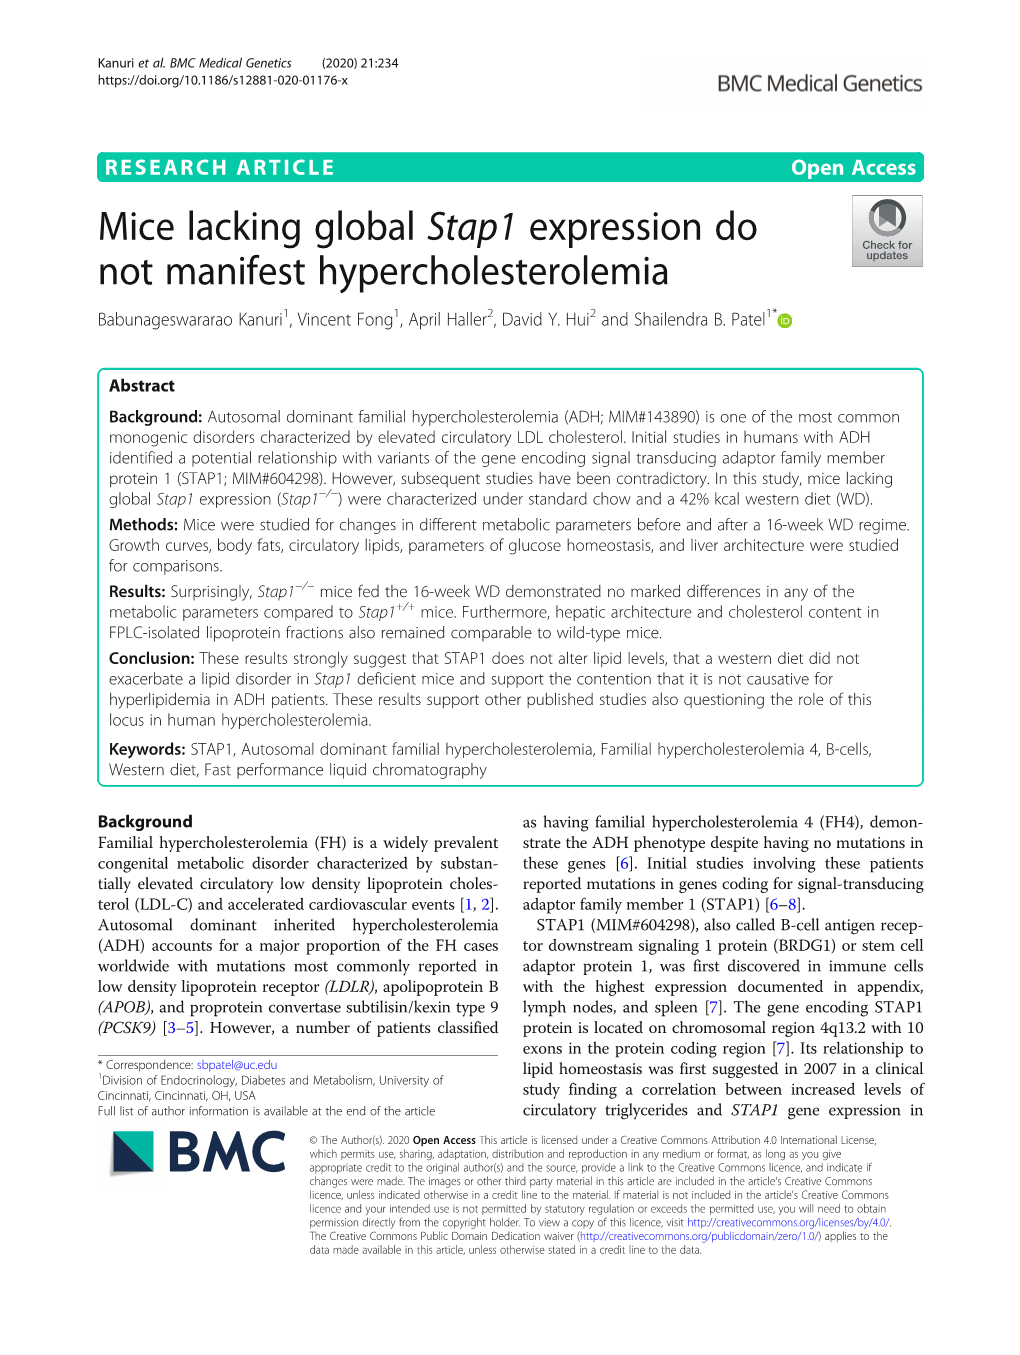 Mice Lacking Global Stap1 Expression Do Not Manifest Hypercholesterolemia Babunageswararao Kanuri1, Vincent Fong1, April Haller2, David Y